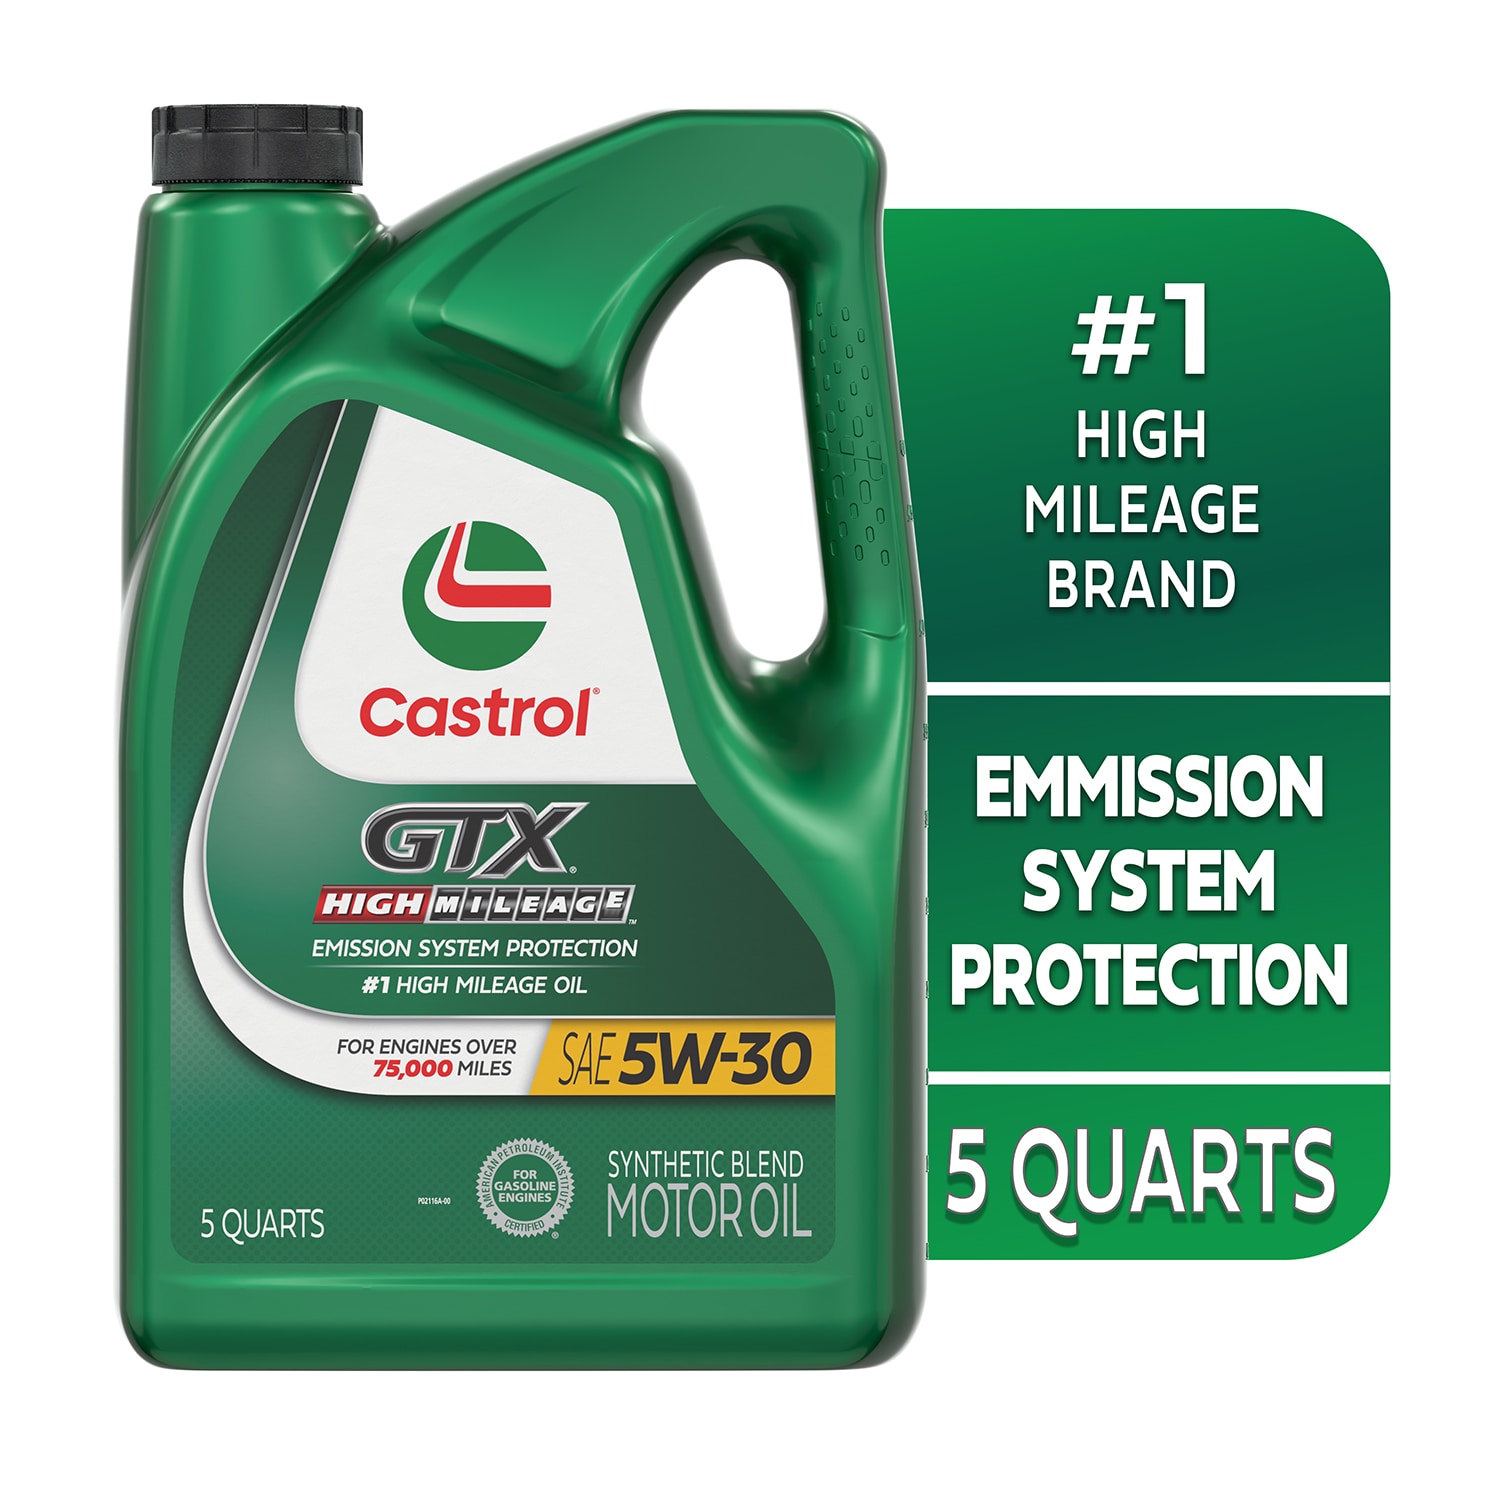 CASTROL Gtx High Mileage 5w-30, 5 Qt in the Motor Oil & Additives 